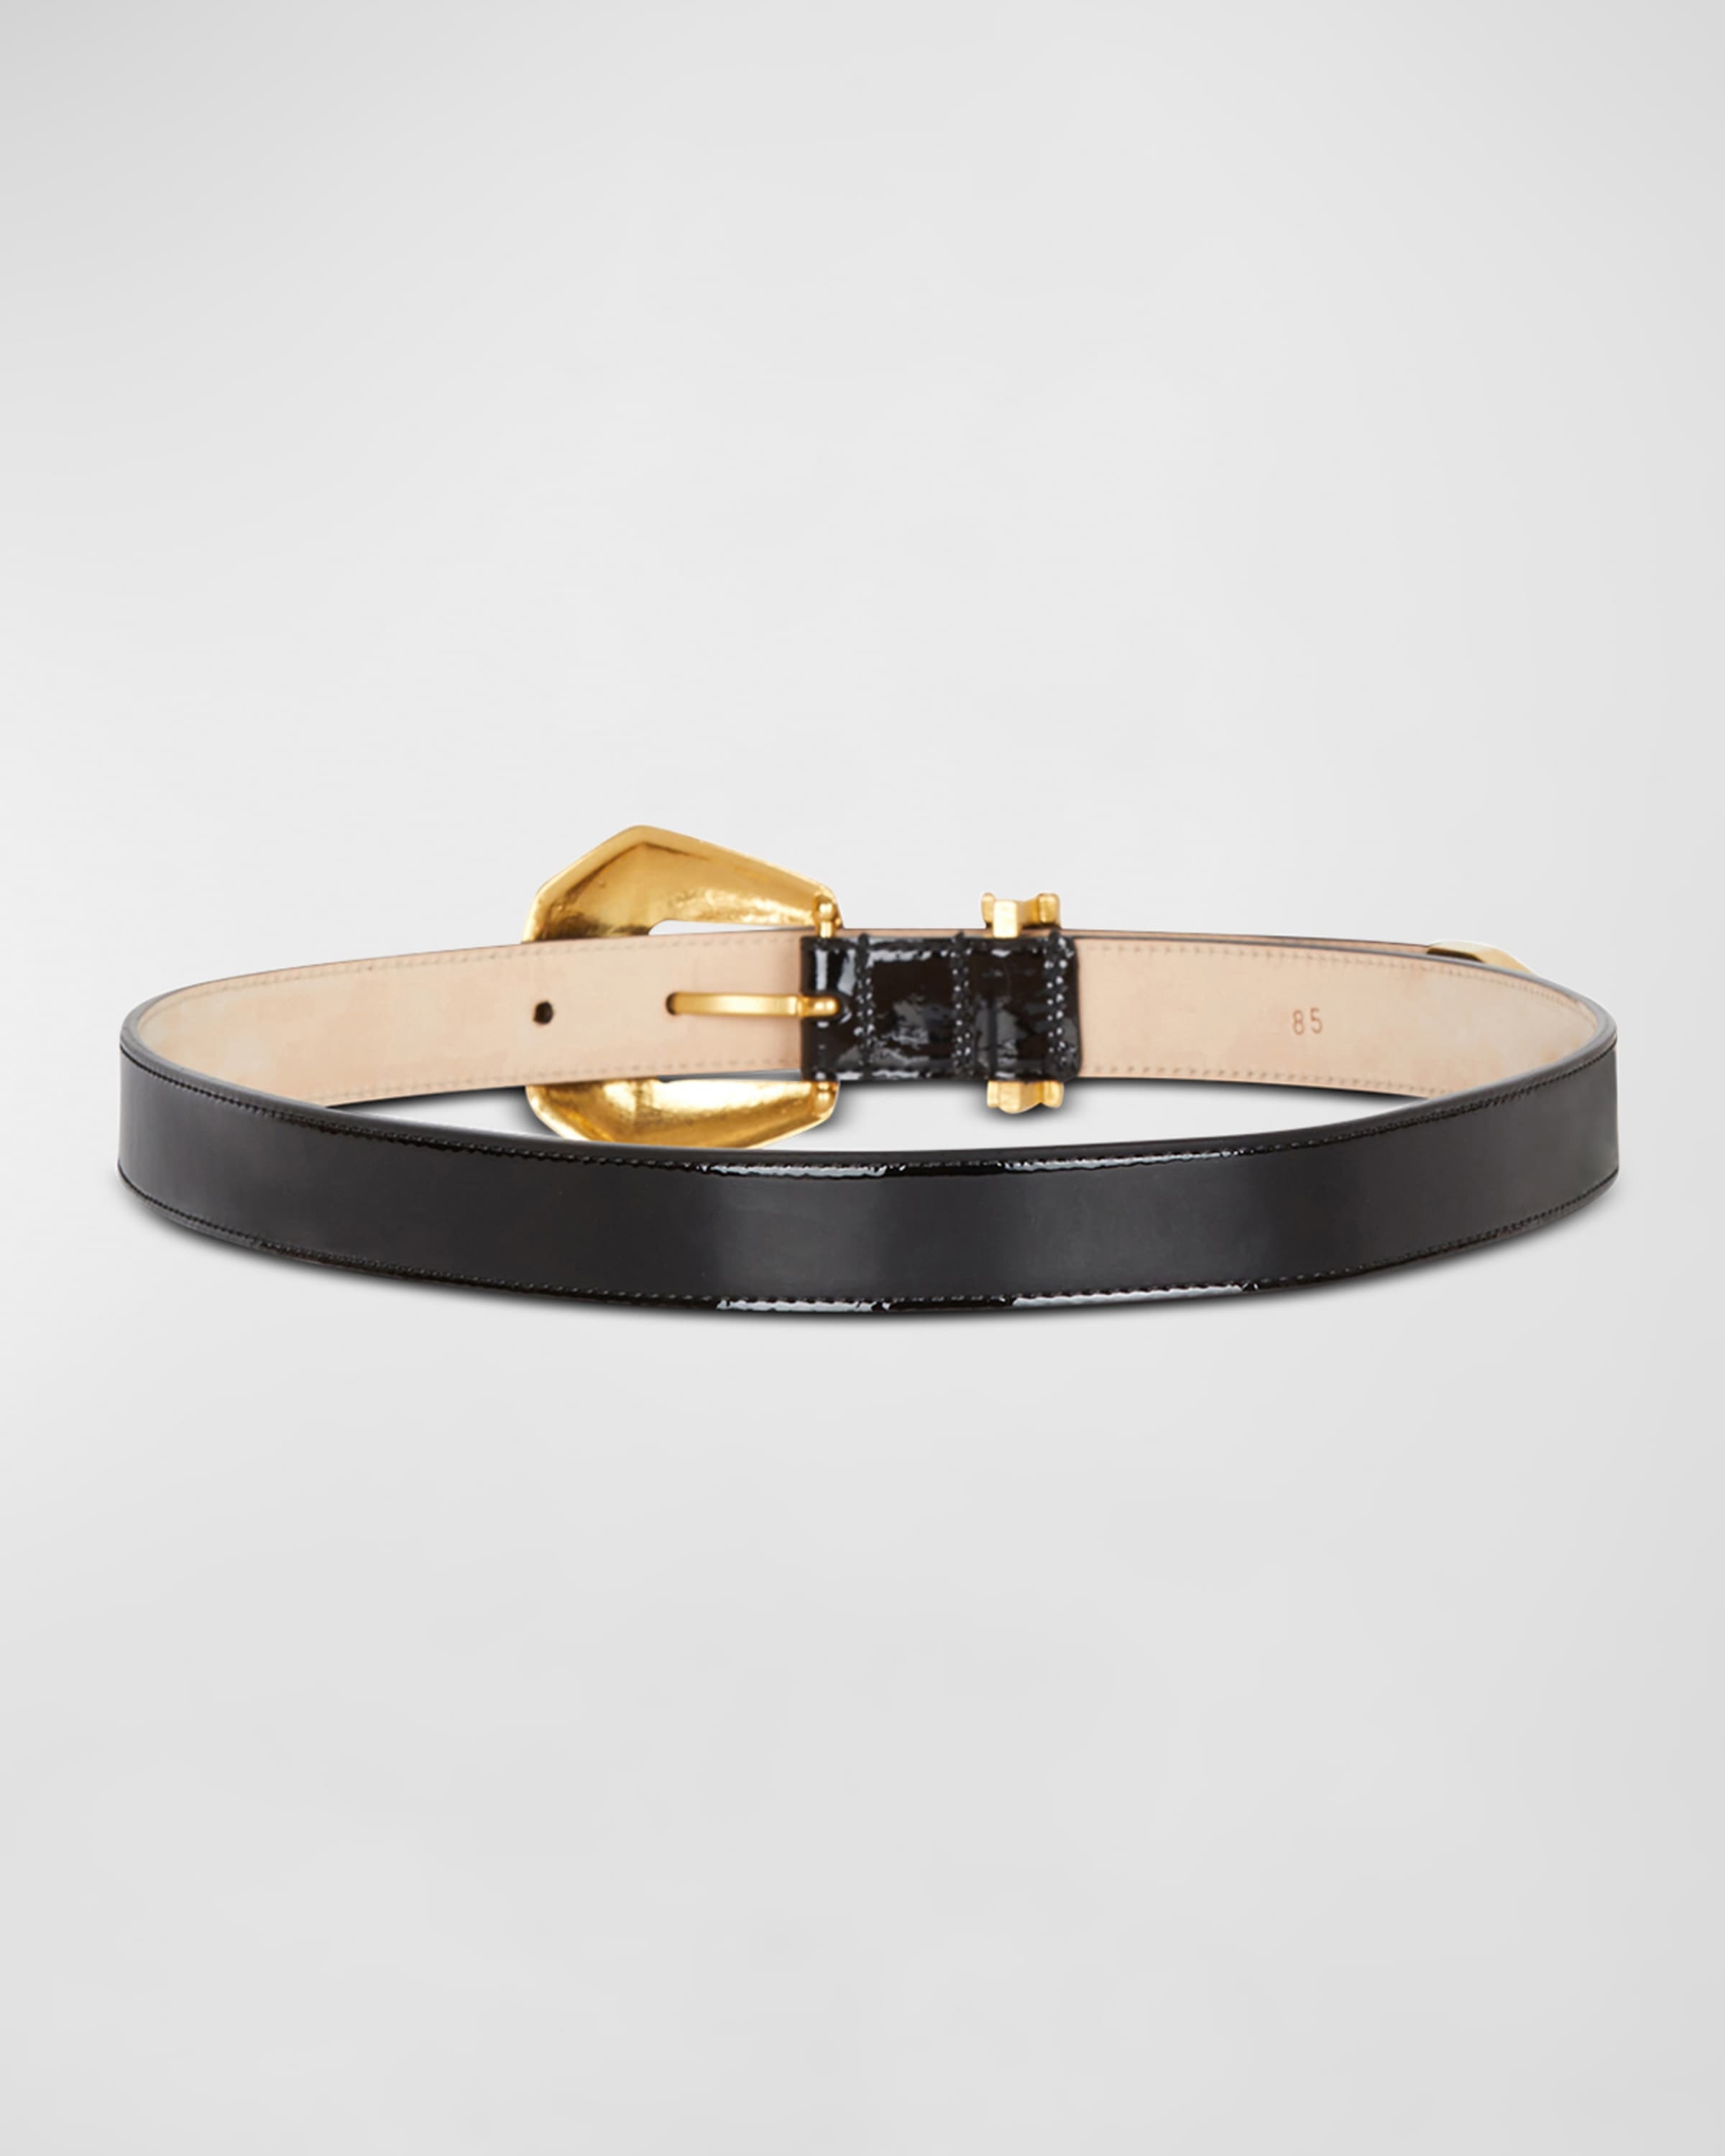 Western Patent Leather & Brass Belt - 2